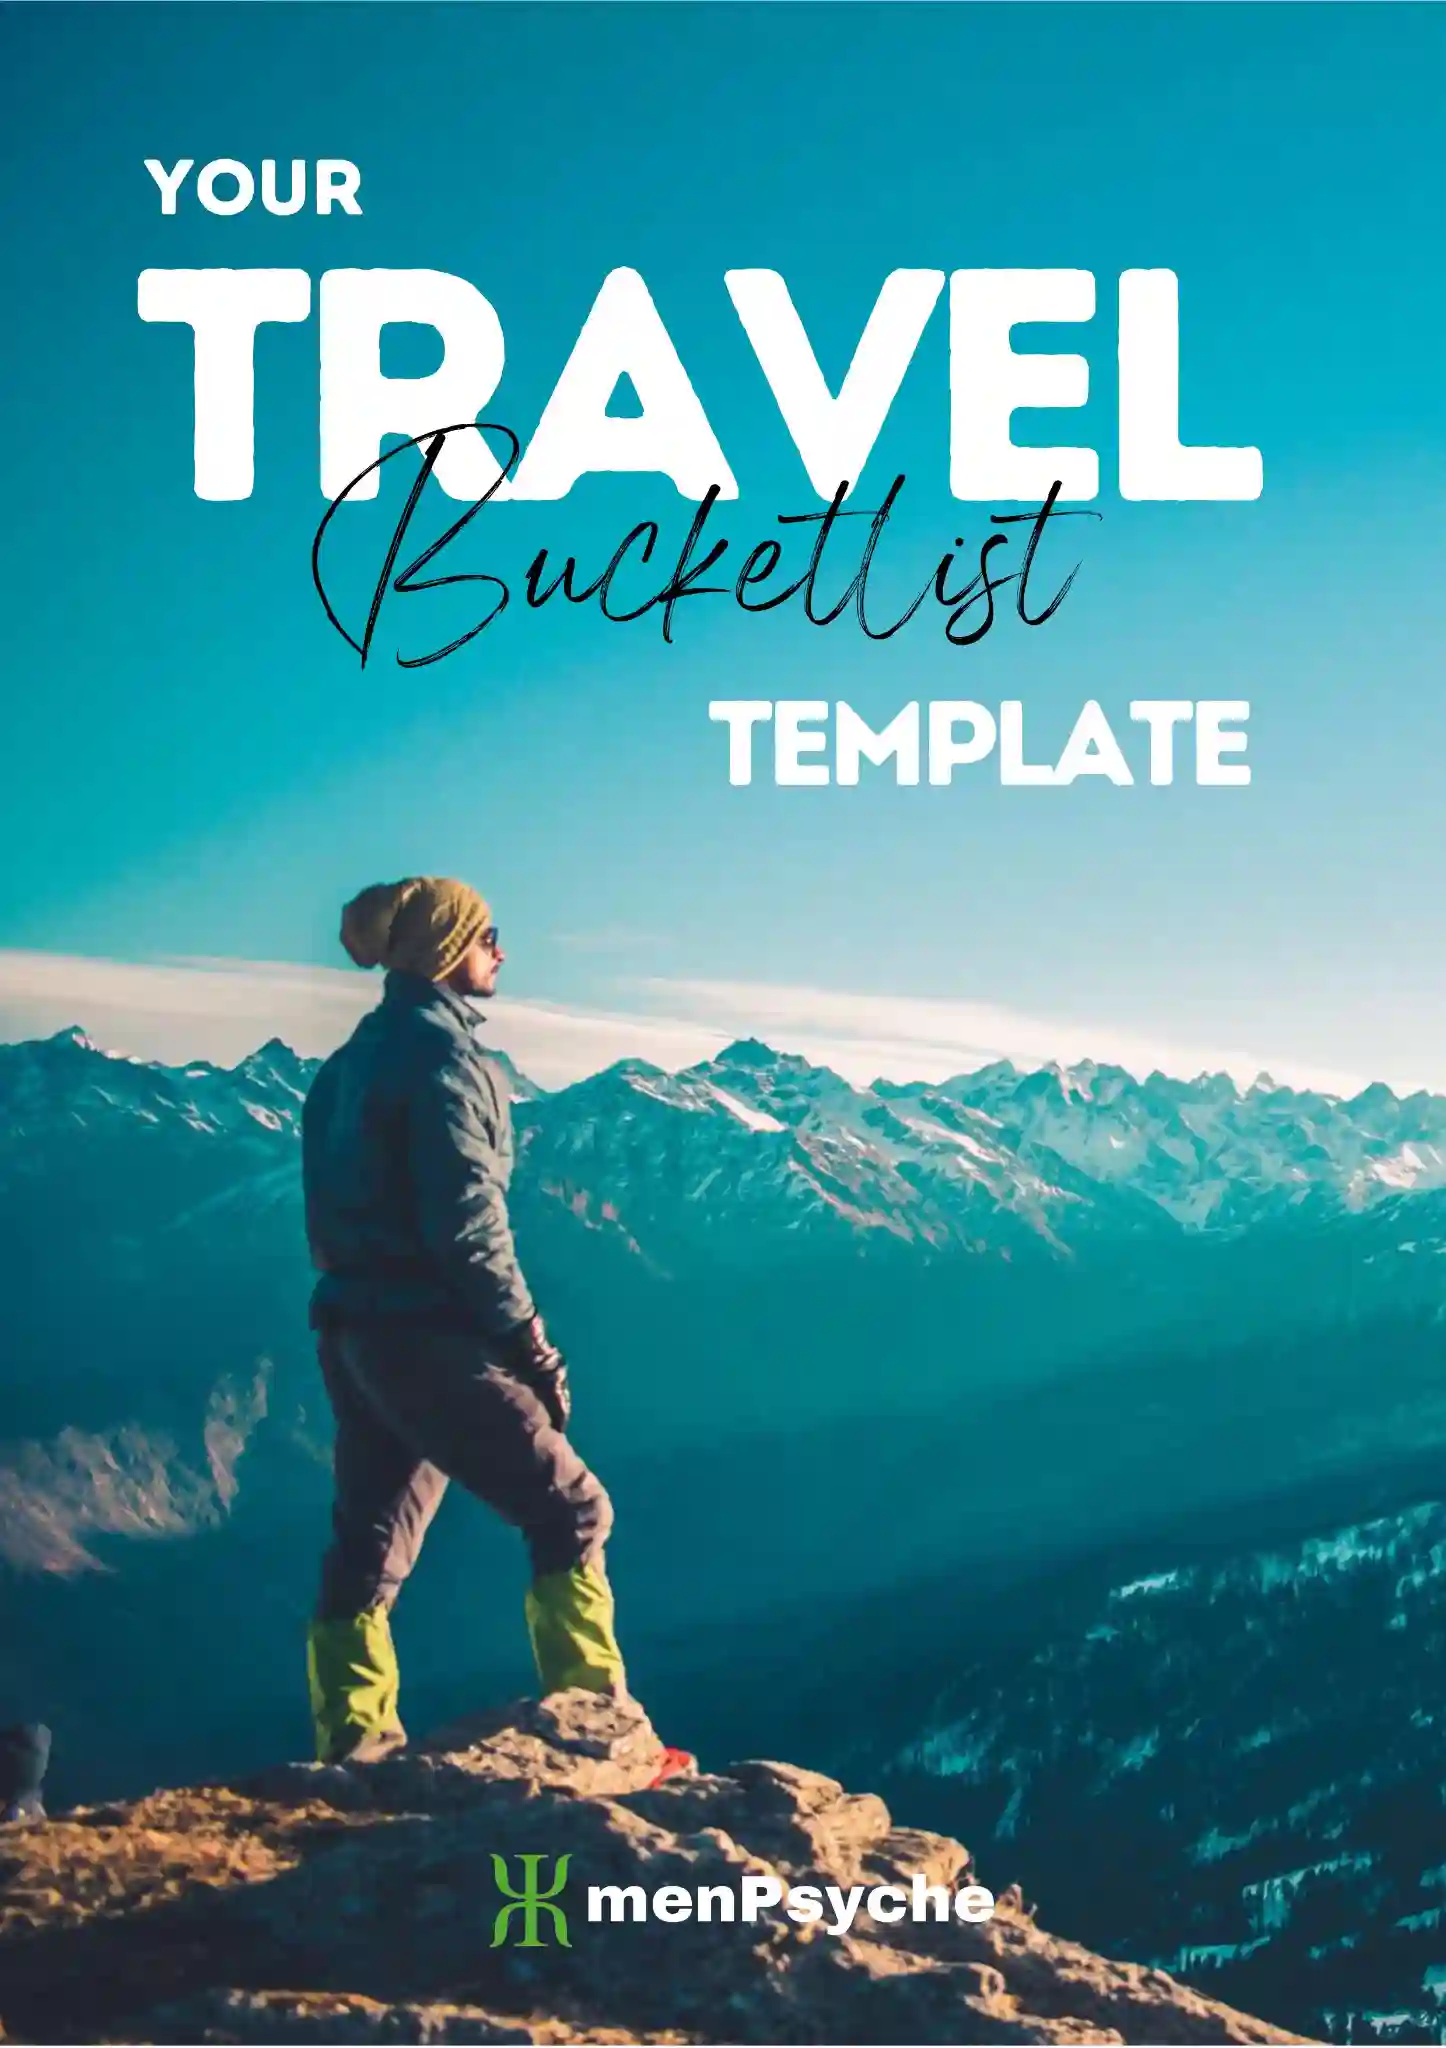 travel bucketlist template free download